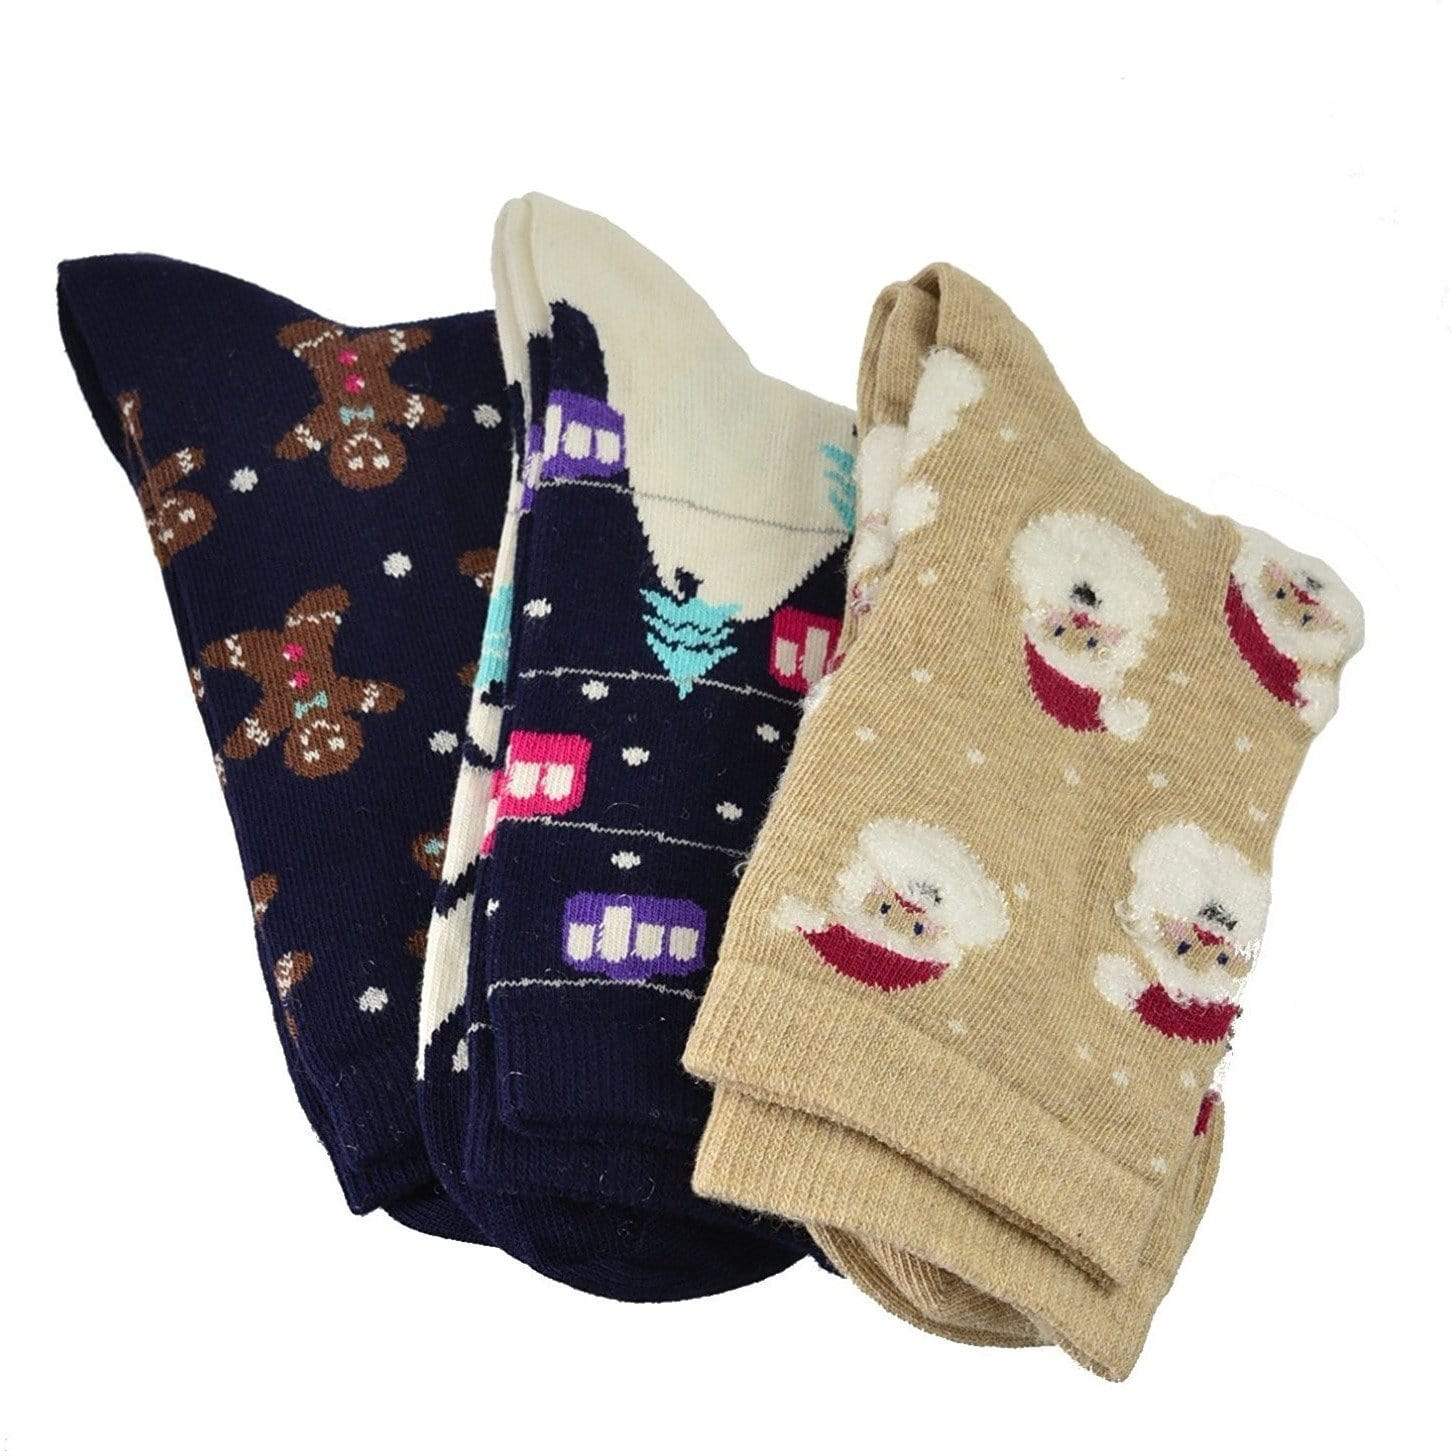 Sierra Socks Women's 3 Pair Pack Cotton Crew Christmas Holiday Socks W2245